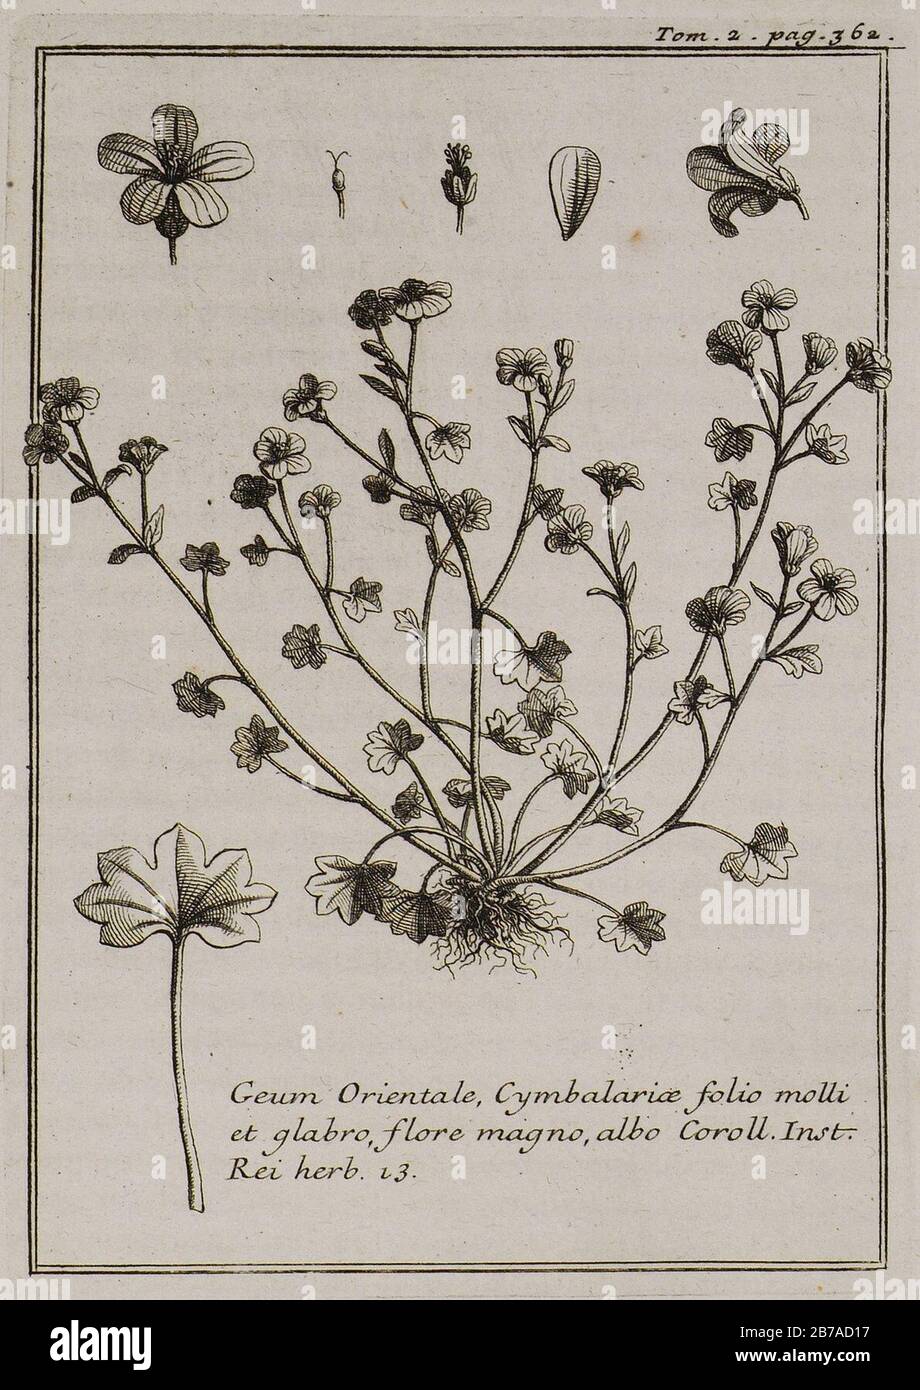 Geum Orientale, Cymbalariae folio molli et glabro, flore magno, albo Coroll Inst Rei herb 13 - Tournefort Joseph Pitton De - 1717. Stock Photo